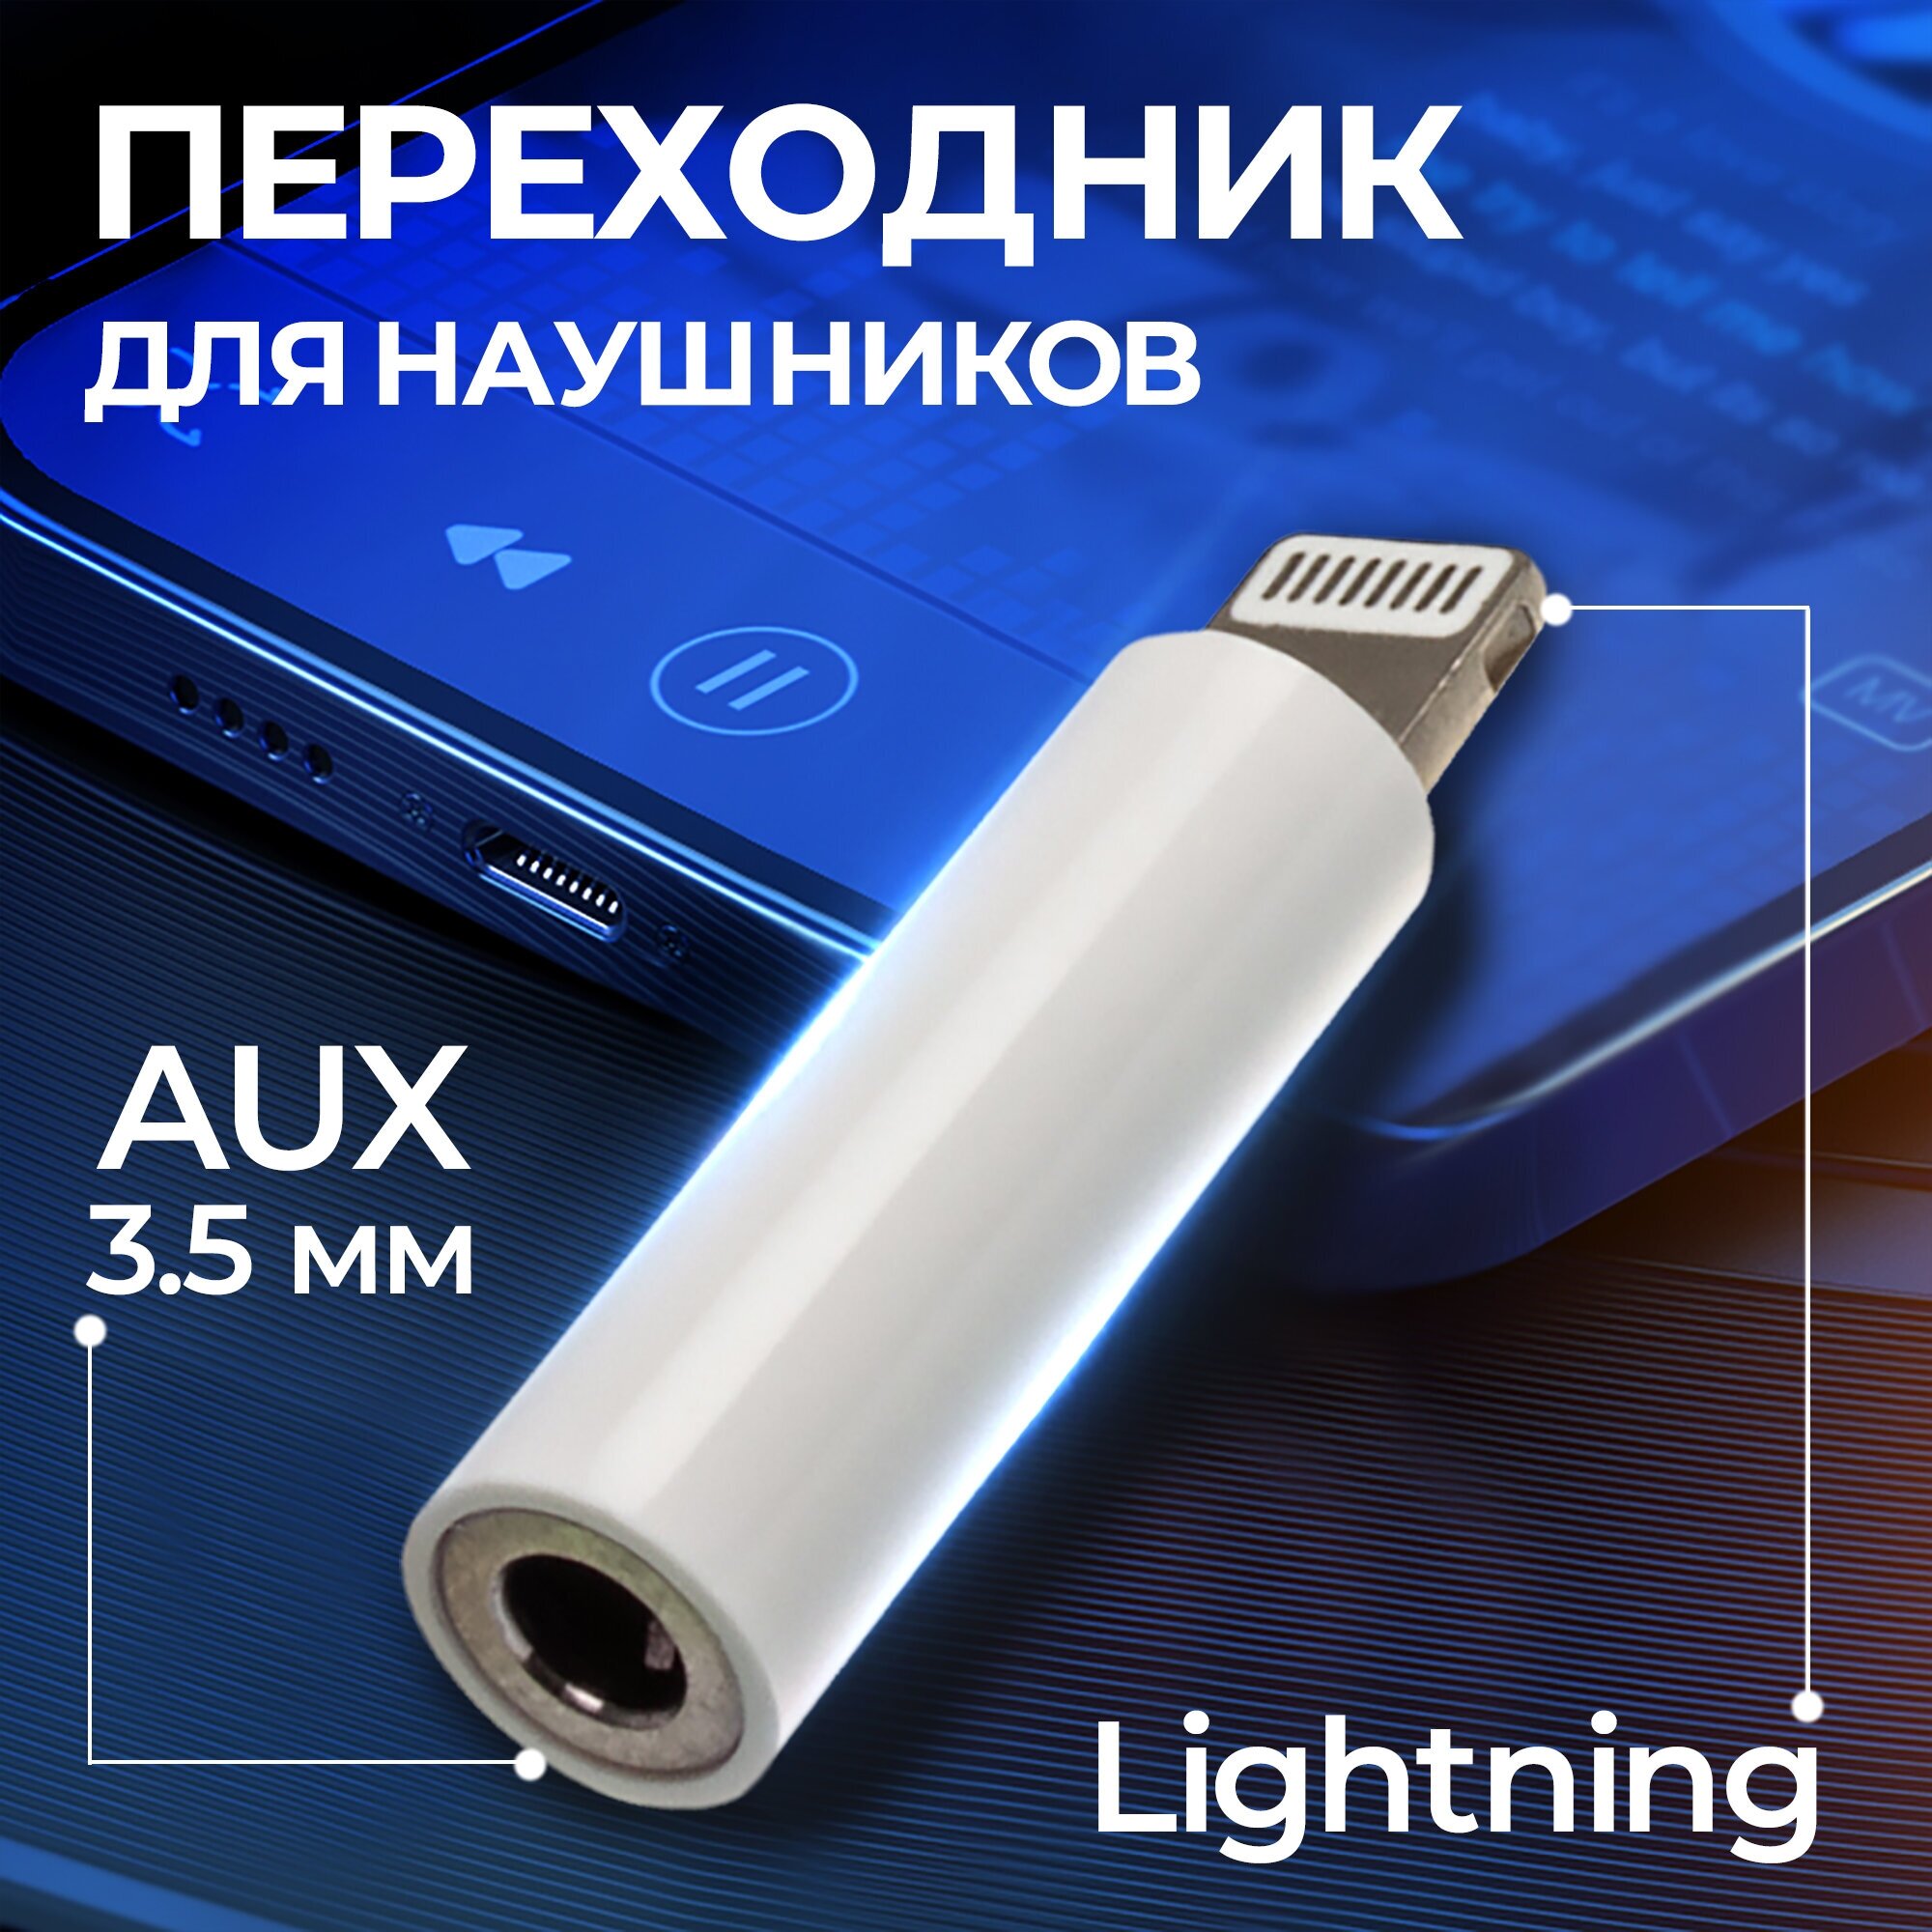 Переходник для наушников Apple Iphone WALKER WA-17 mini jack 3.5 mm (AUX) - Lightning